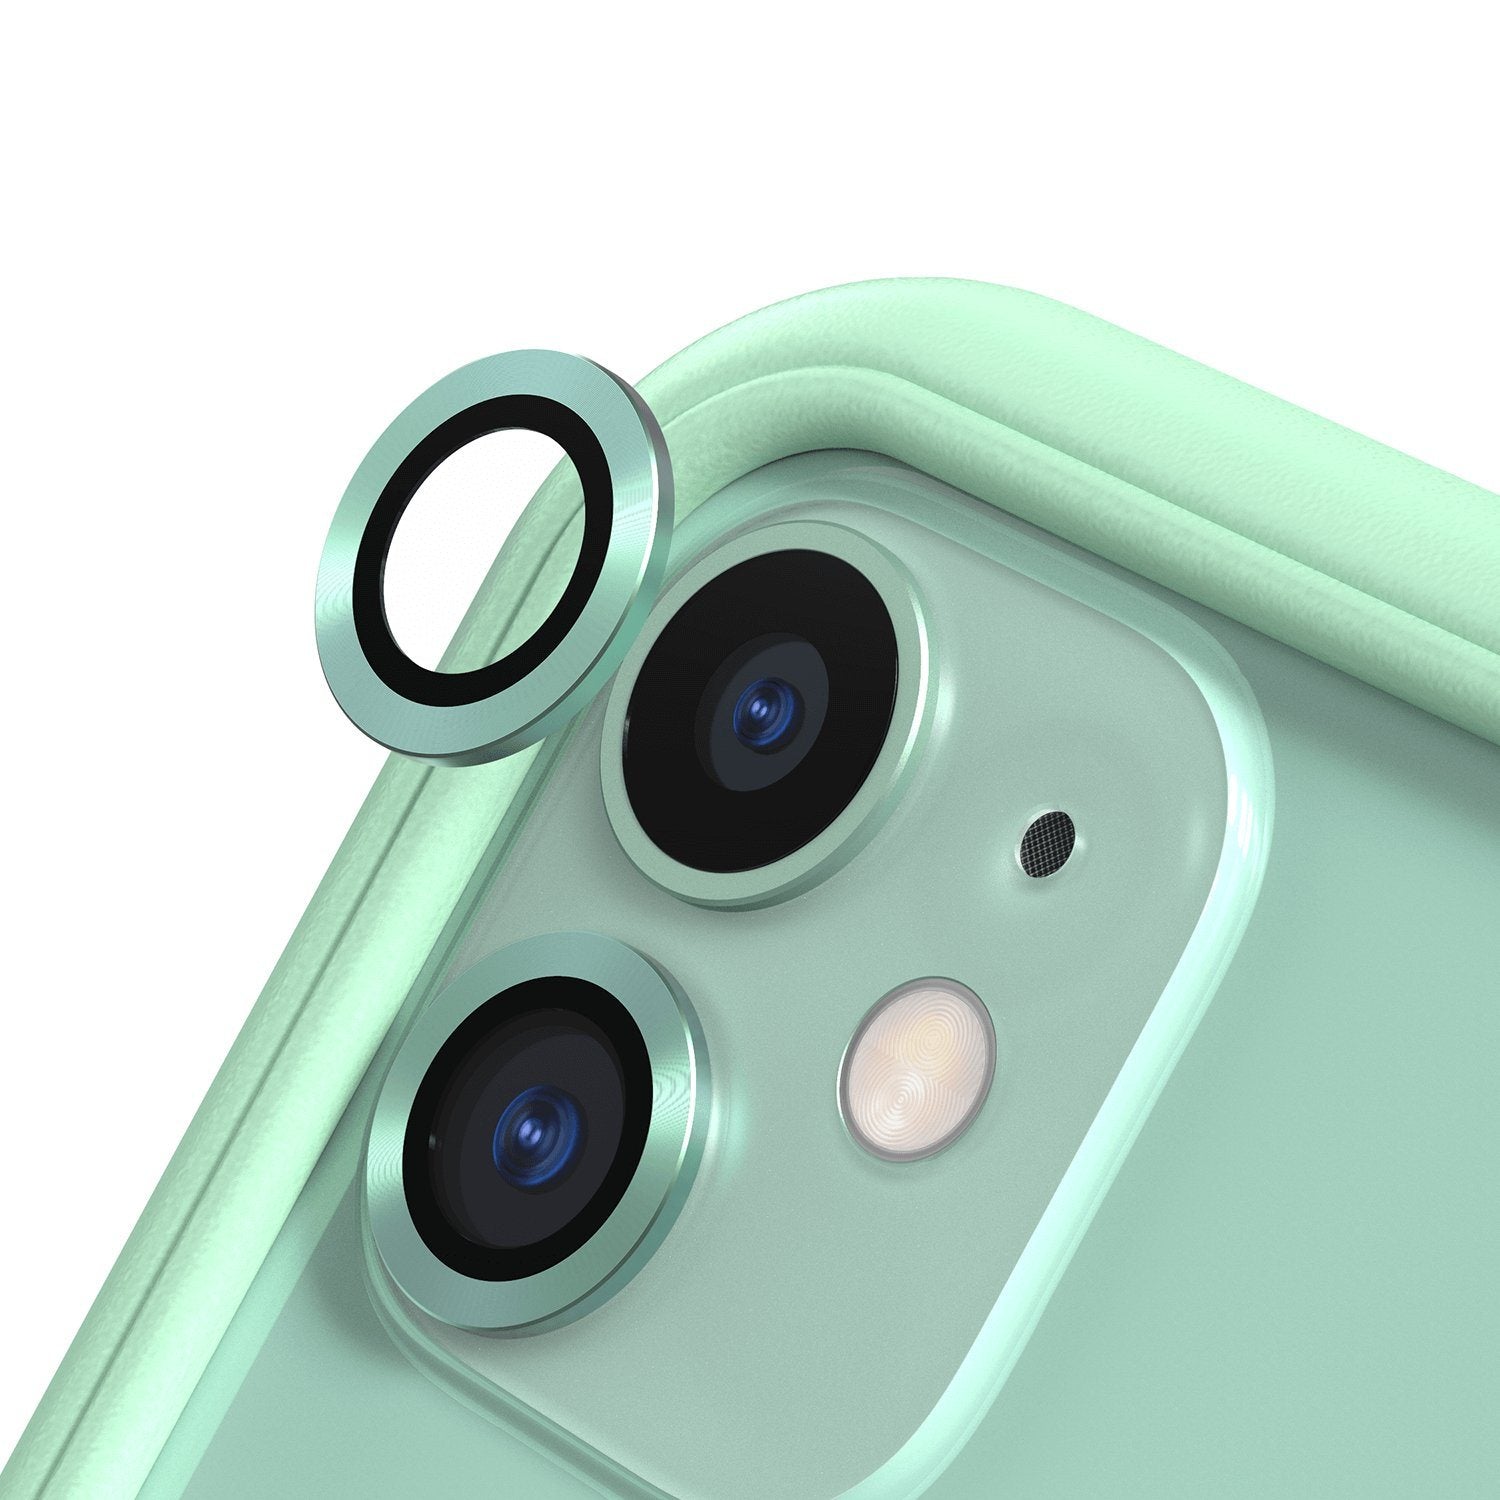 RhinoShield Tempered Glass Lens Protector for iPhone 11 6.1"(2PCs), Green Default Rhinoshield Green 